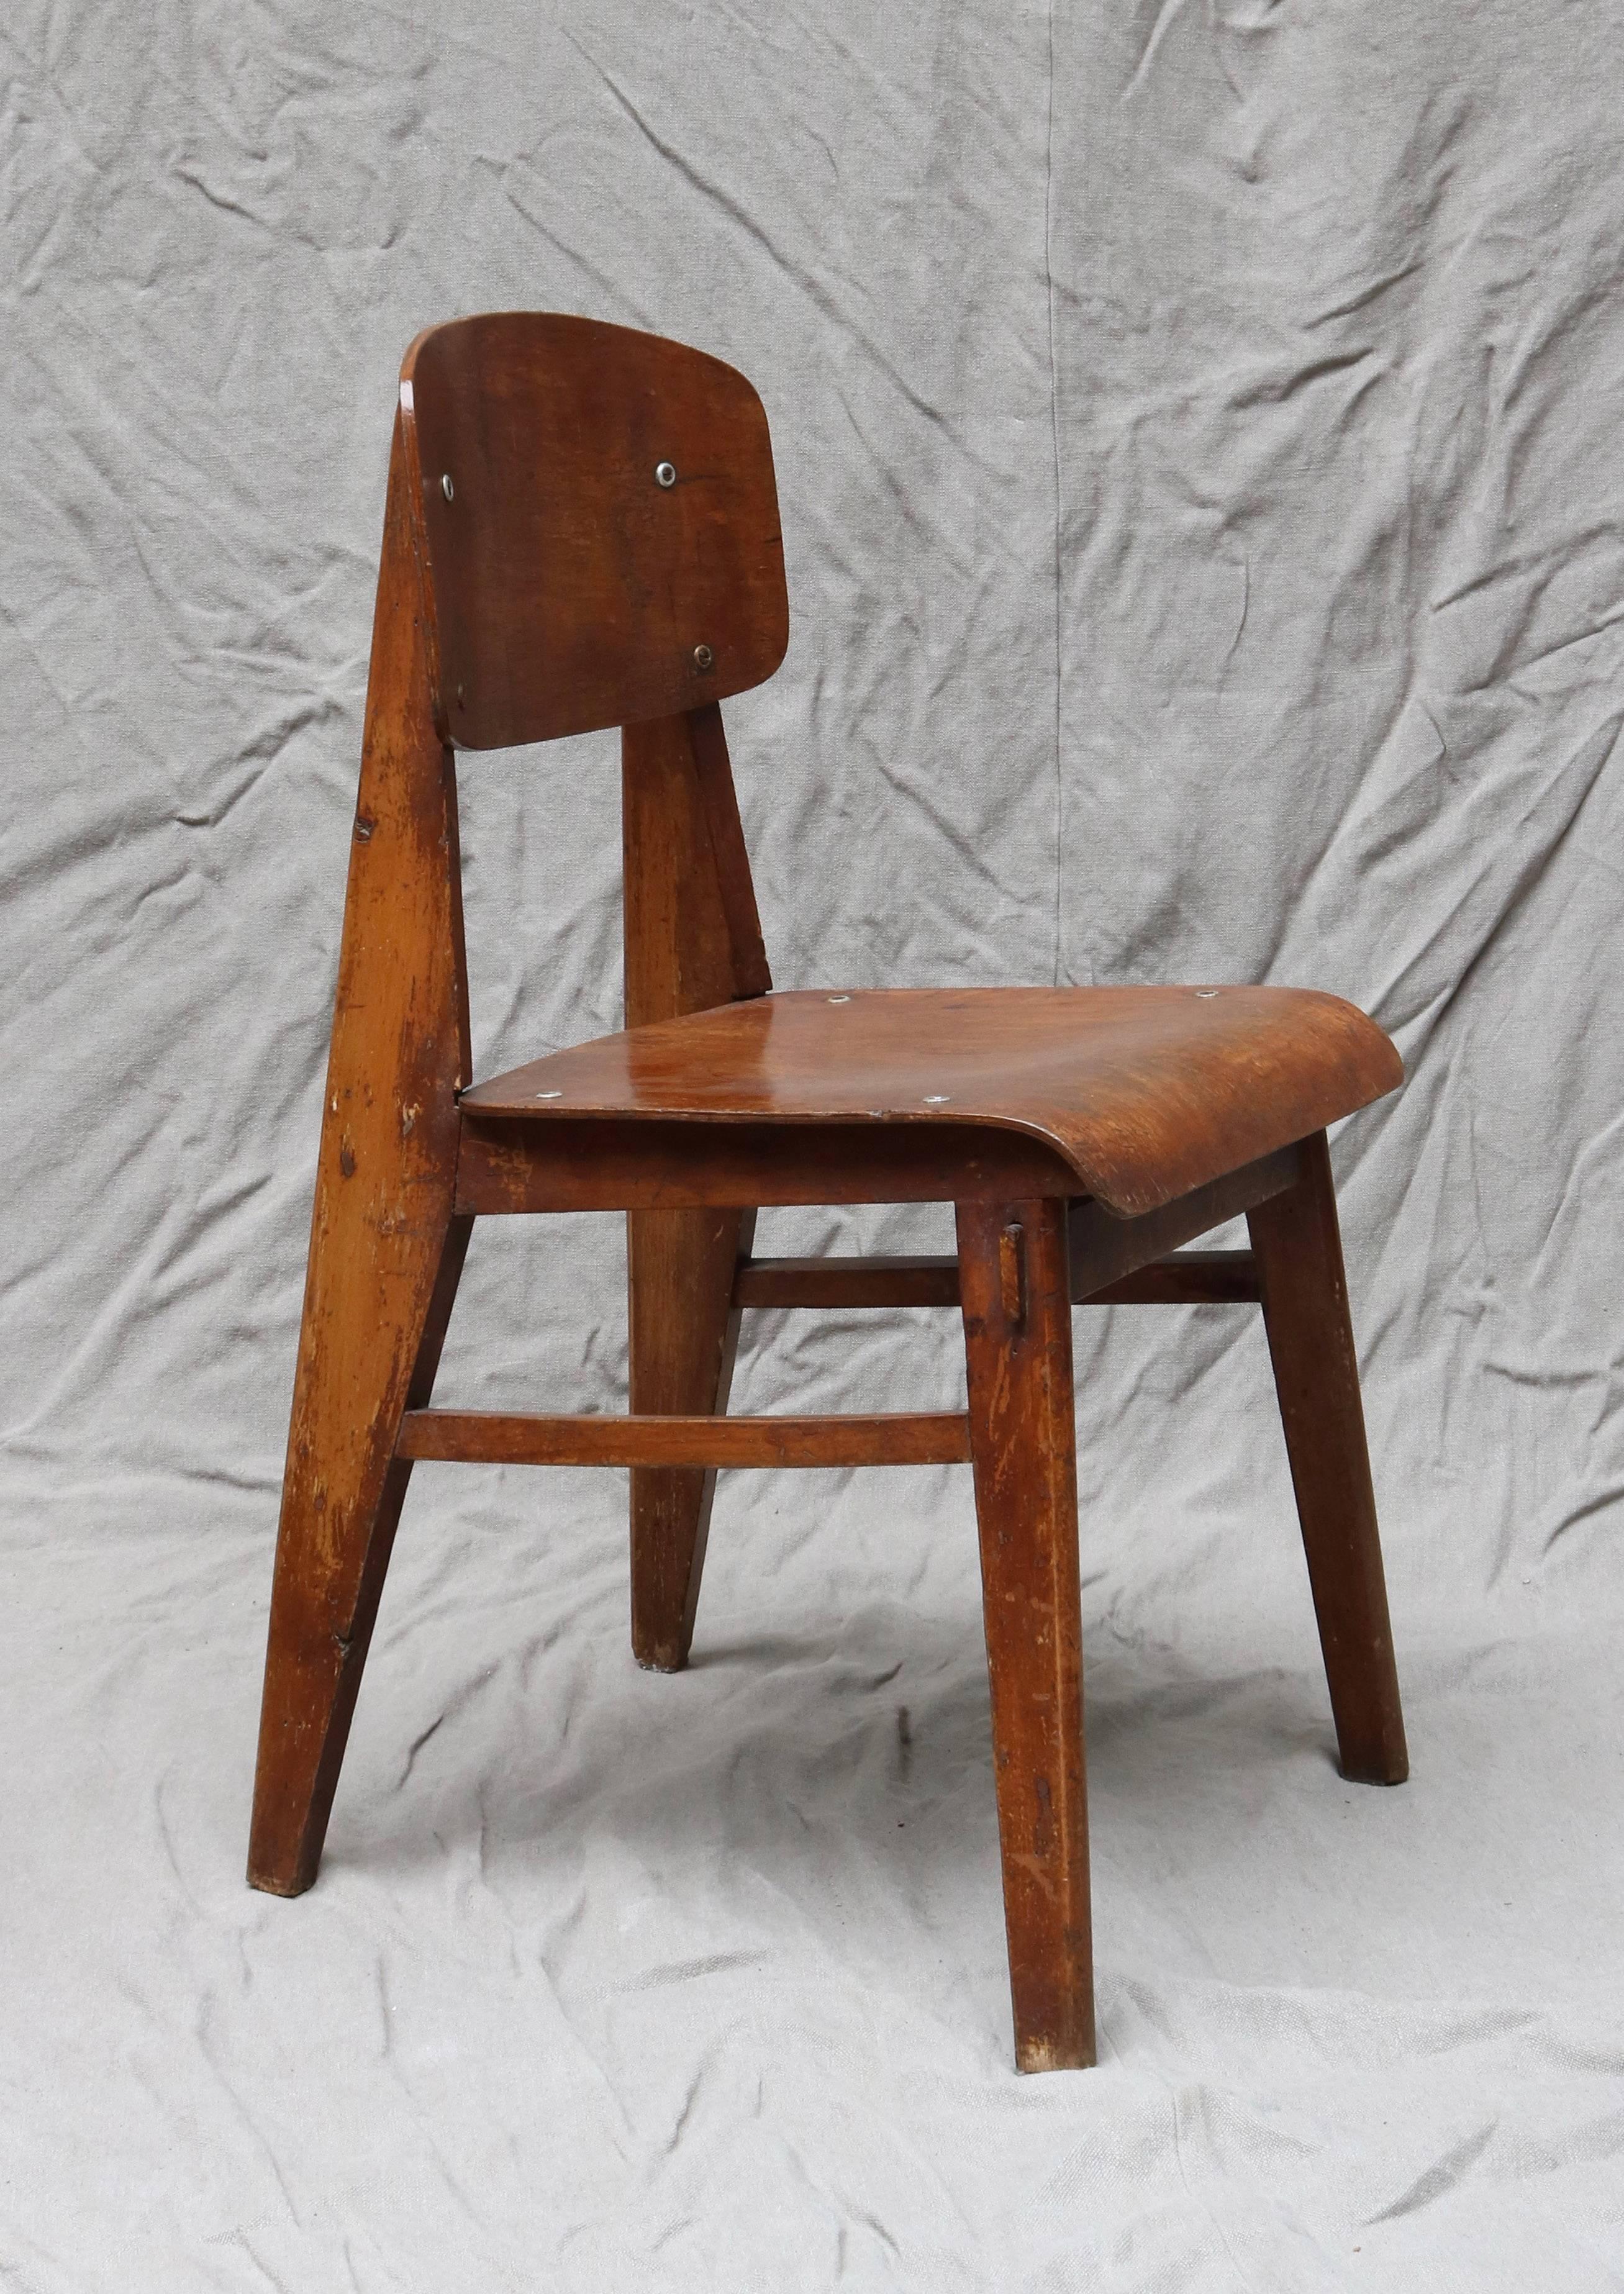 Unique Midcentury Wooden Chair by Jean Prouvé In Good Condition For Sale In Copenhagen, DK